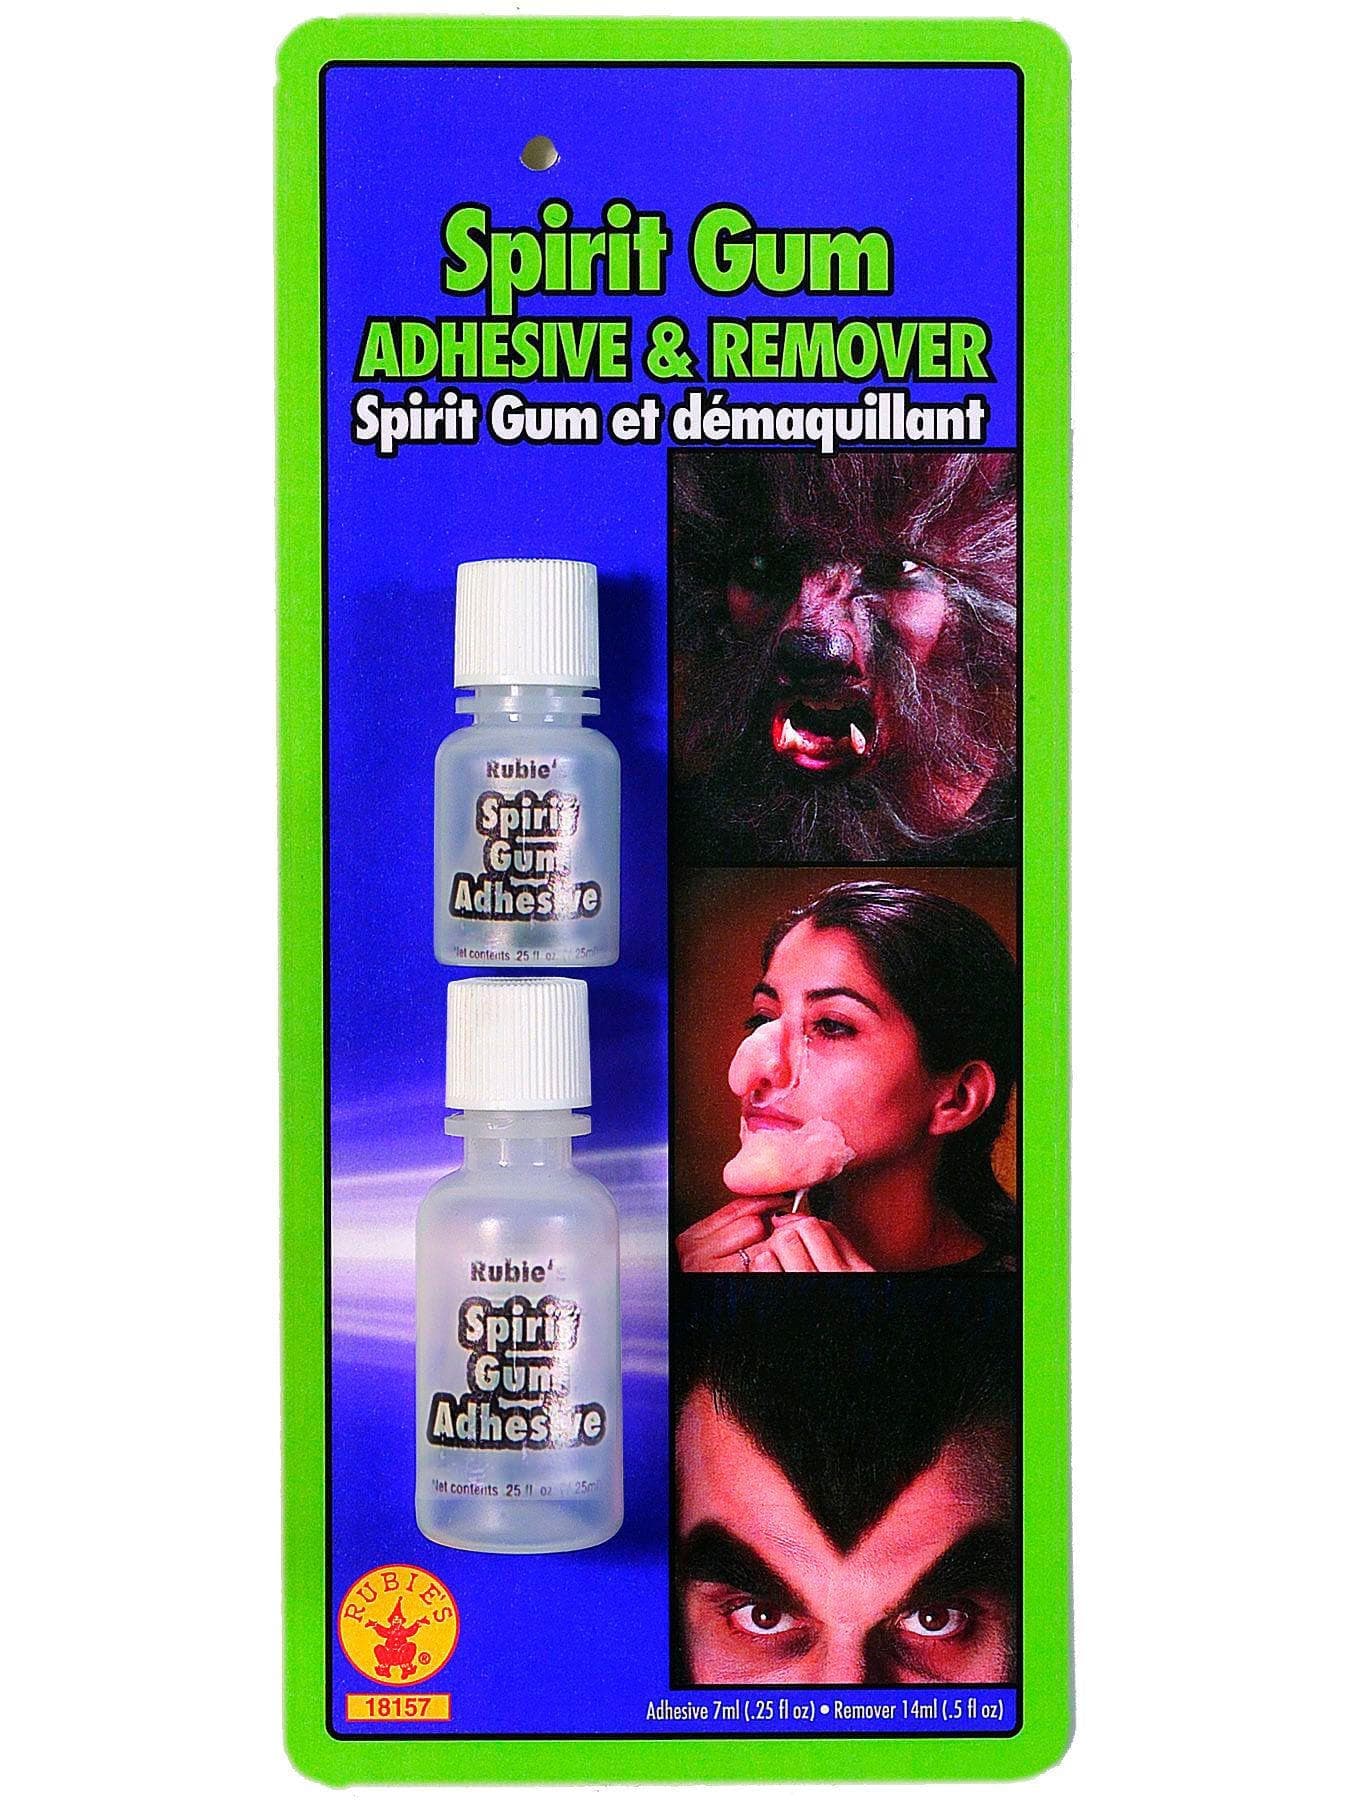 Adult Spirit Gum Adhesive and Remover - costumes.com